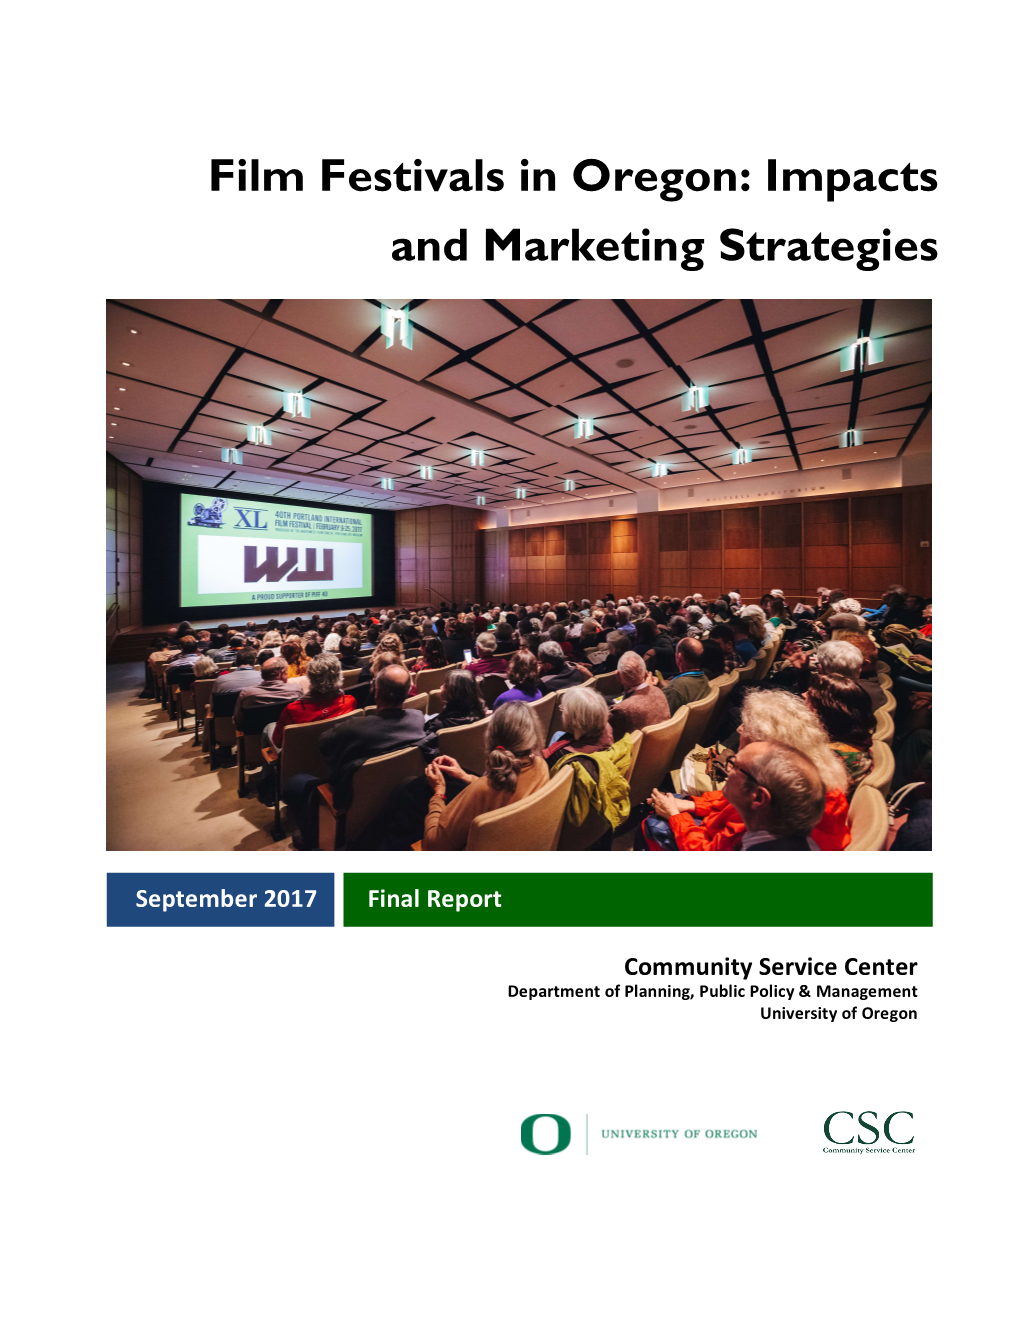 Oregon Film Festivals Impacts FINAL